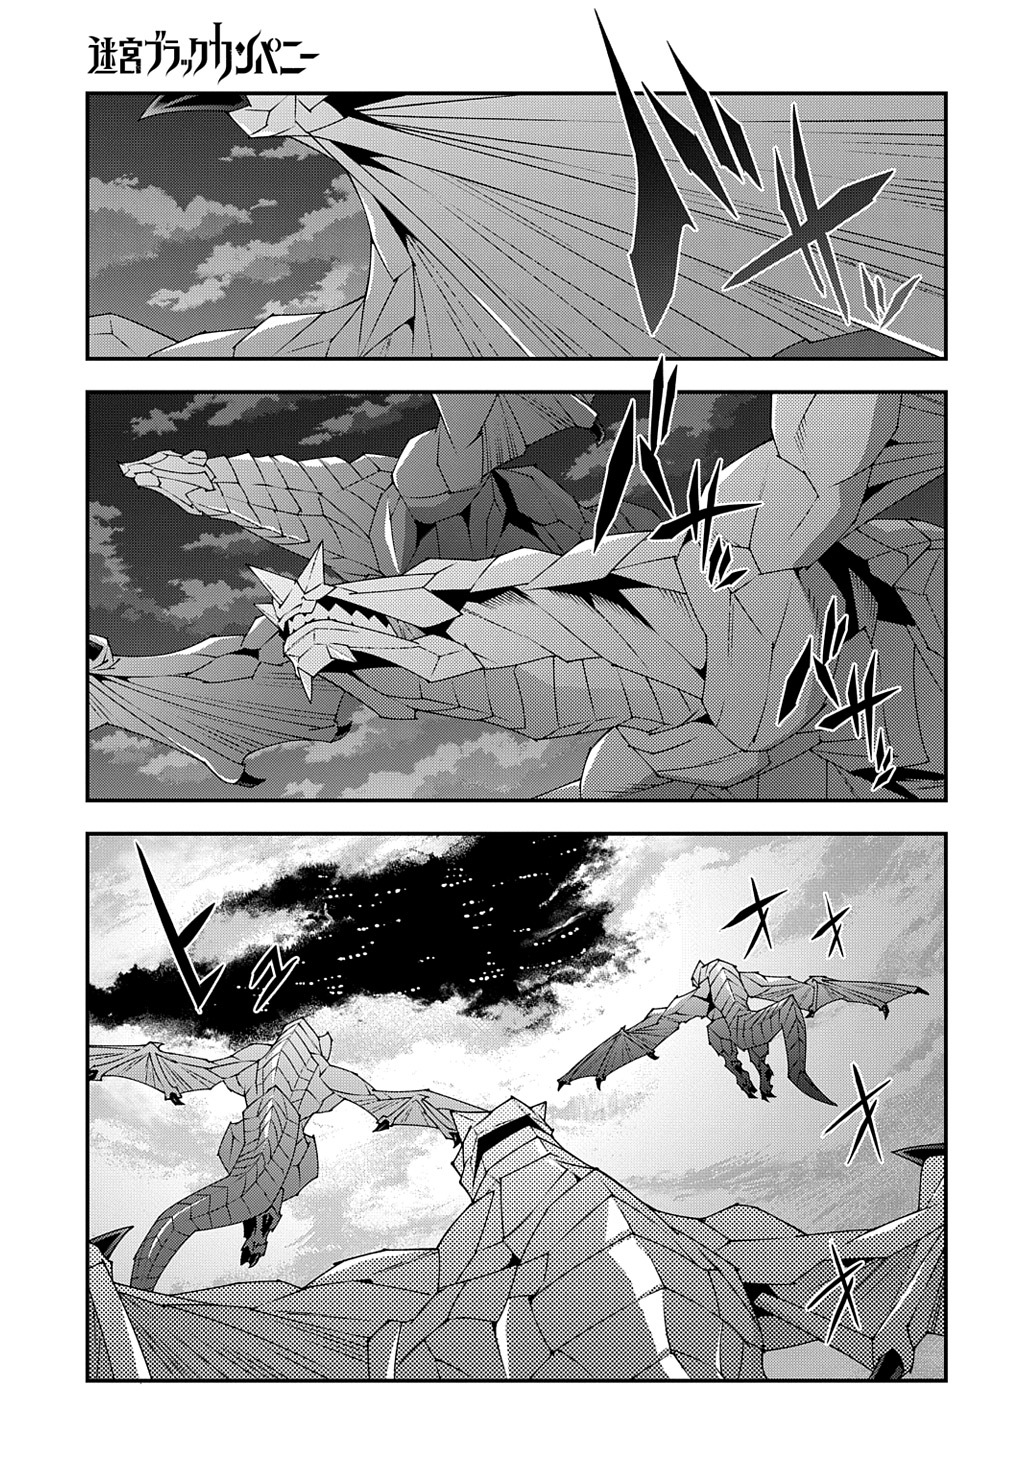 Meikyuu Black Company - Chapter 51.1 - Page 1